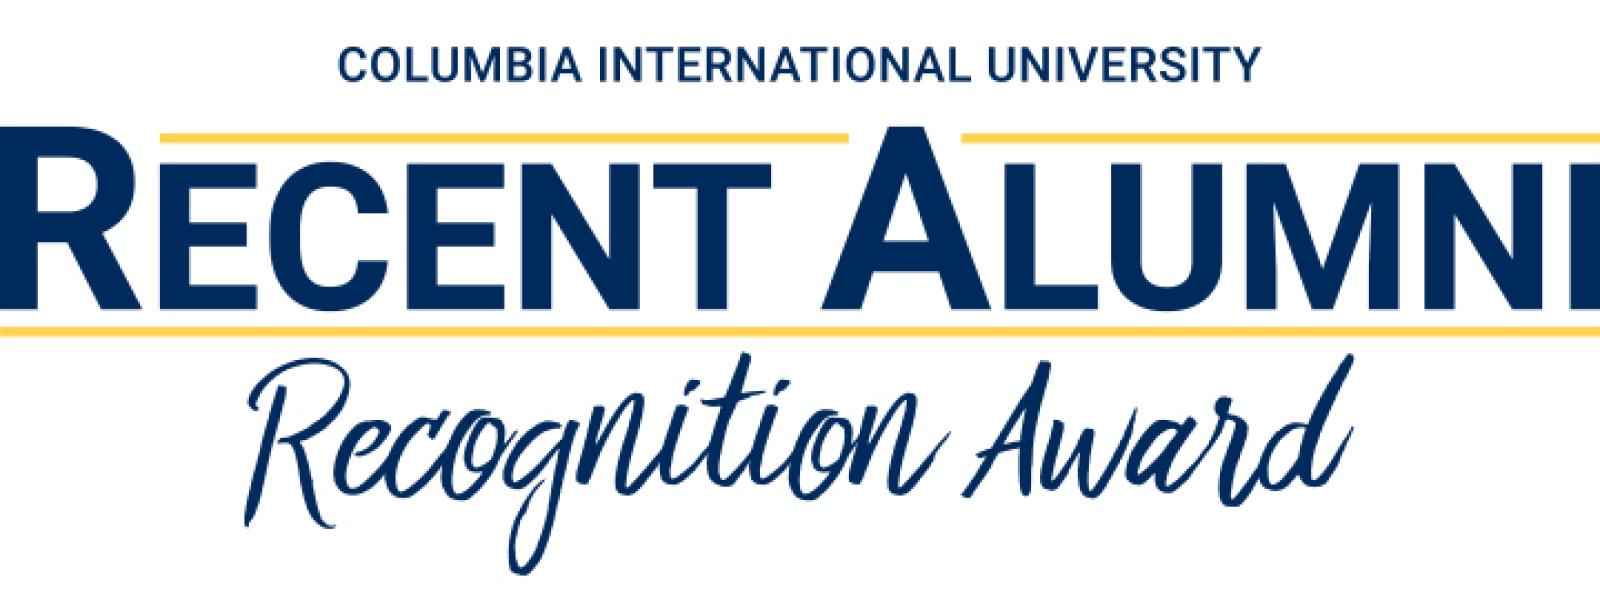 Recent Alumni Recognition Award